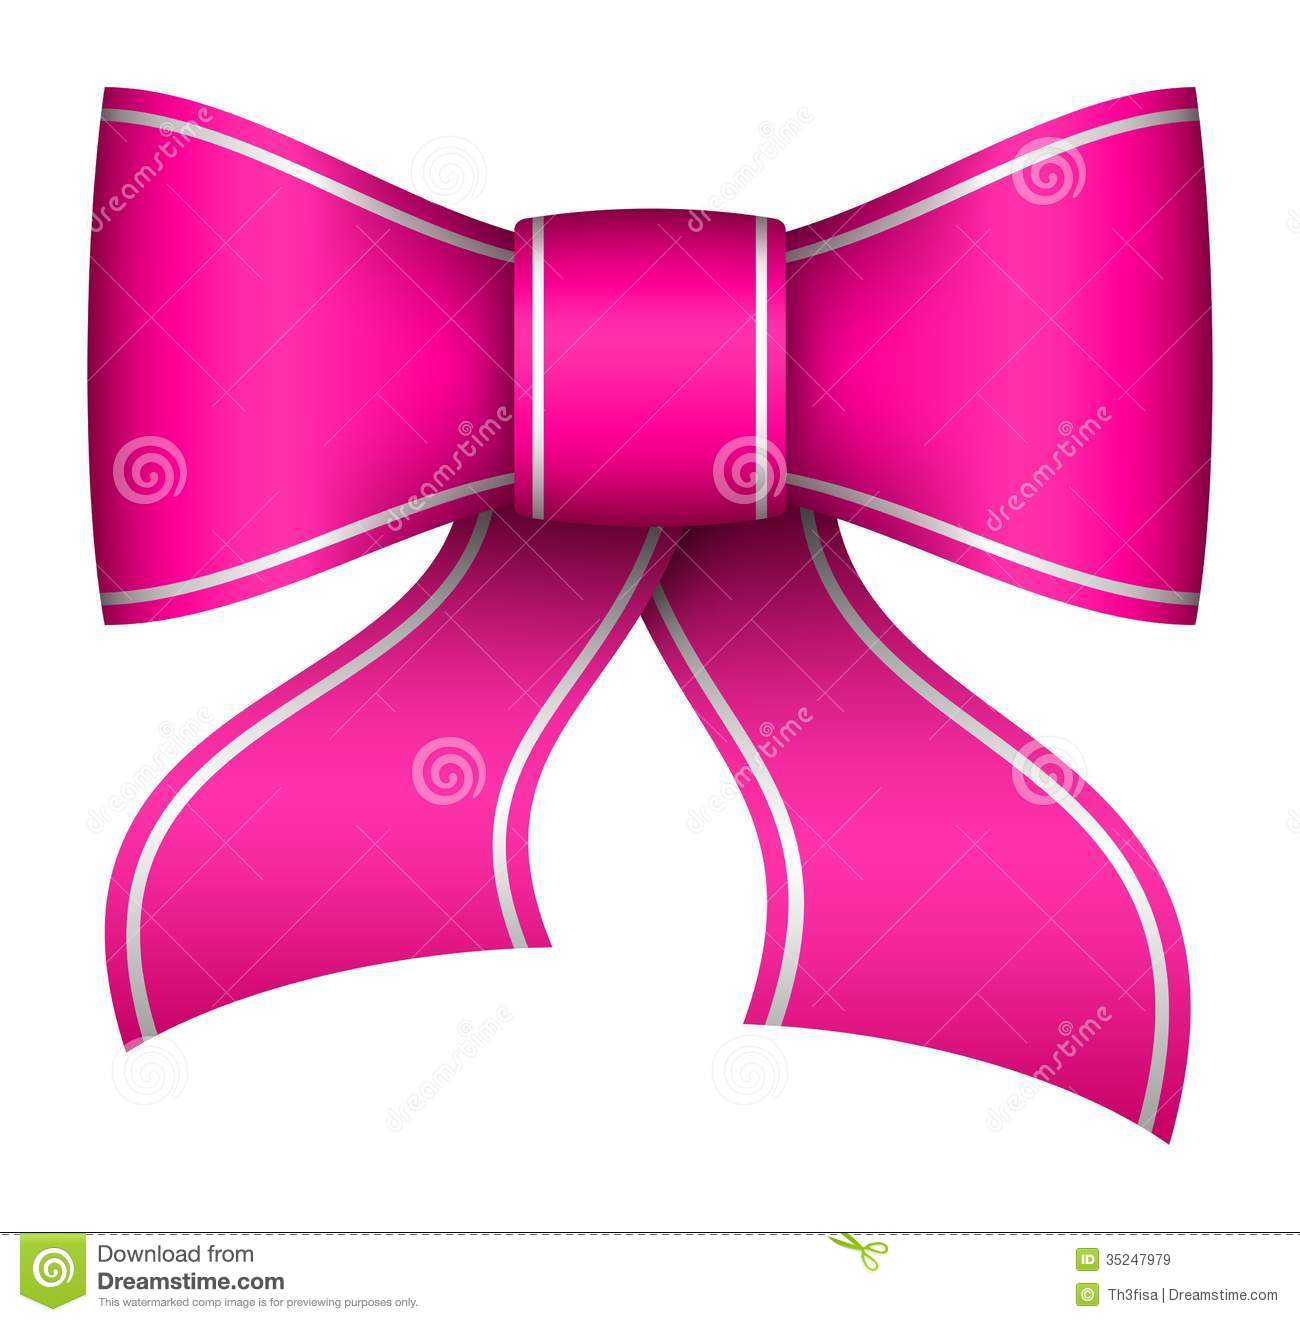 Pink Christmas Ribbon Bow Royalty Free Stock Images   Image  35247979